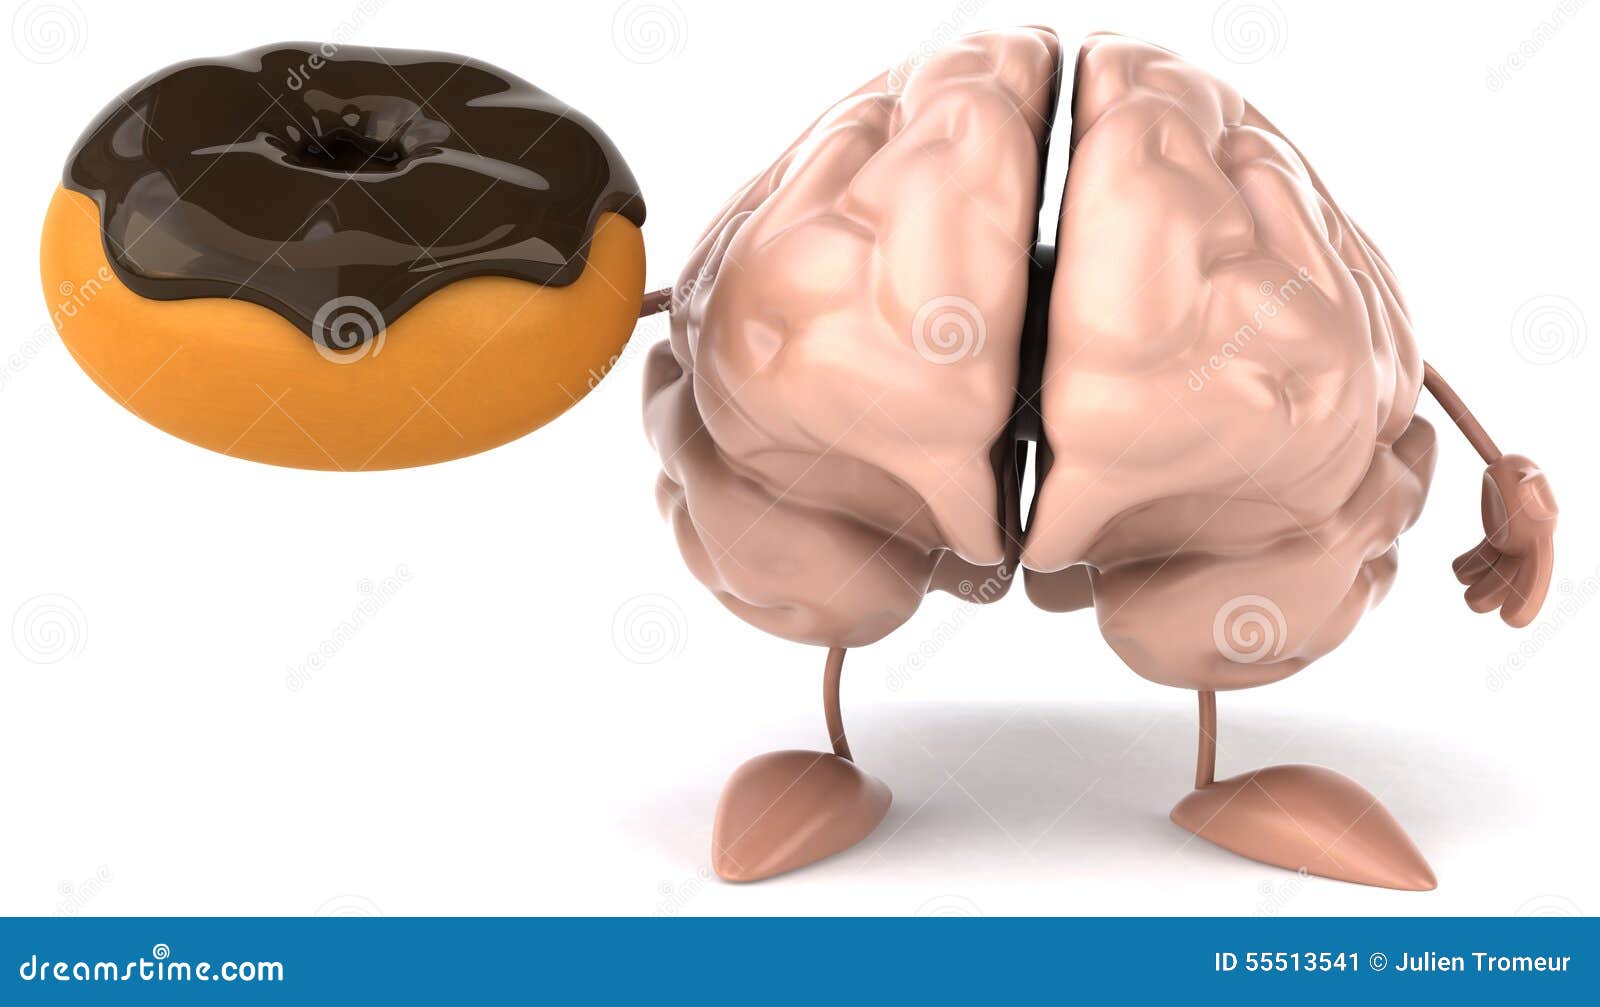 Fun brain. Мозг мультяшный. Brain перец. Мультяшный мозг обнимается. Angry created Intellect.